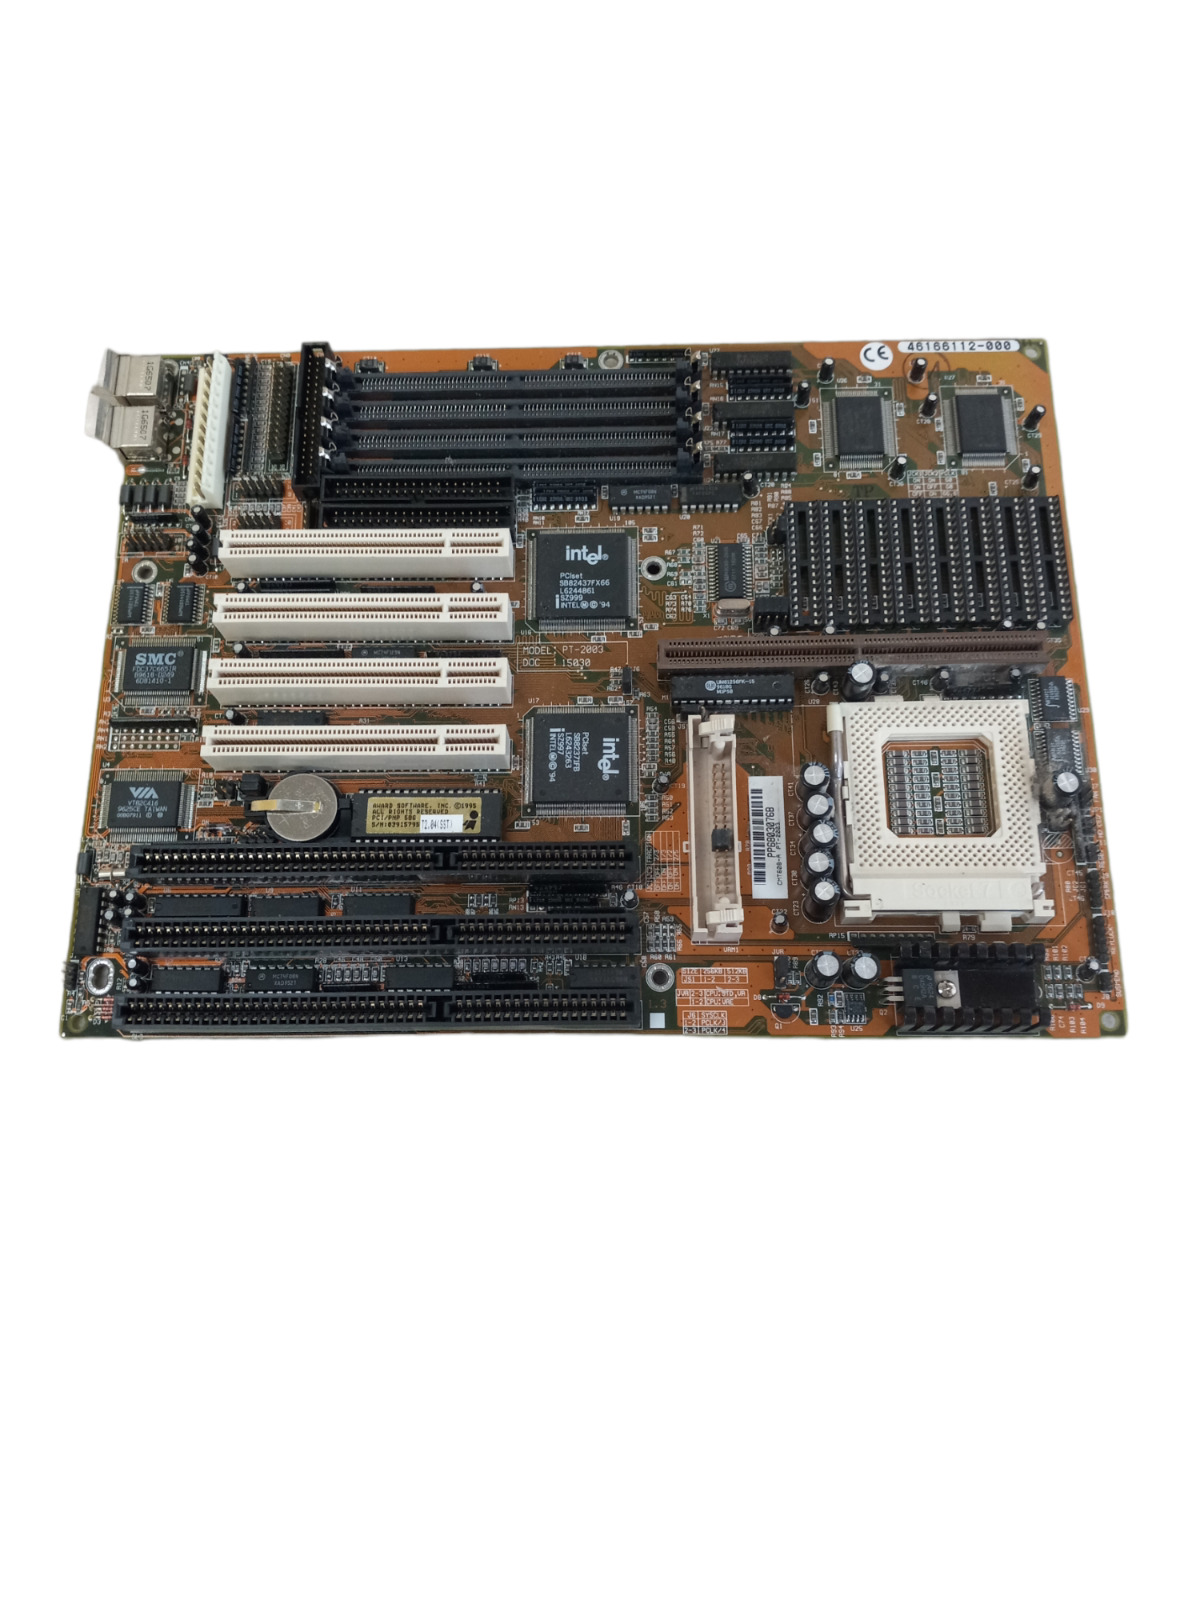 RARE VINTAGE FIC PT-2003 INTEL PCIset PENTIUM AT SOCKET 7 MOTHERBOARD MBMX37